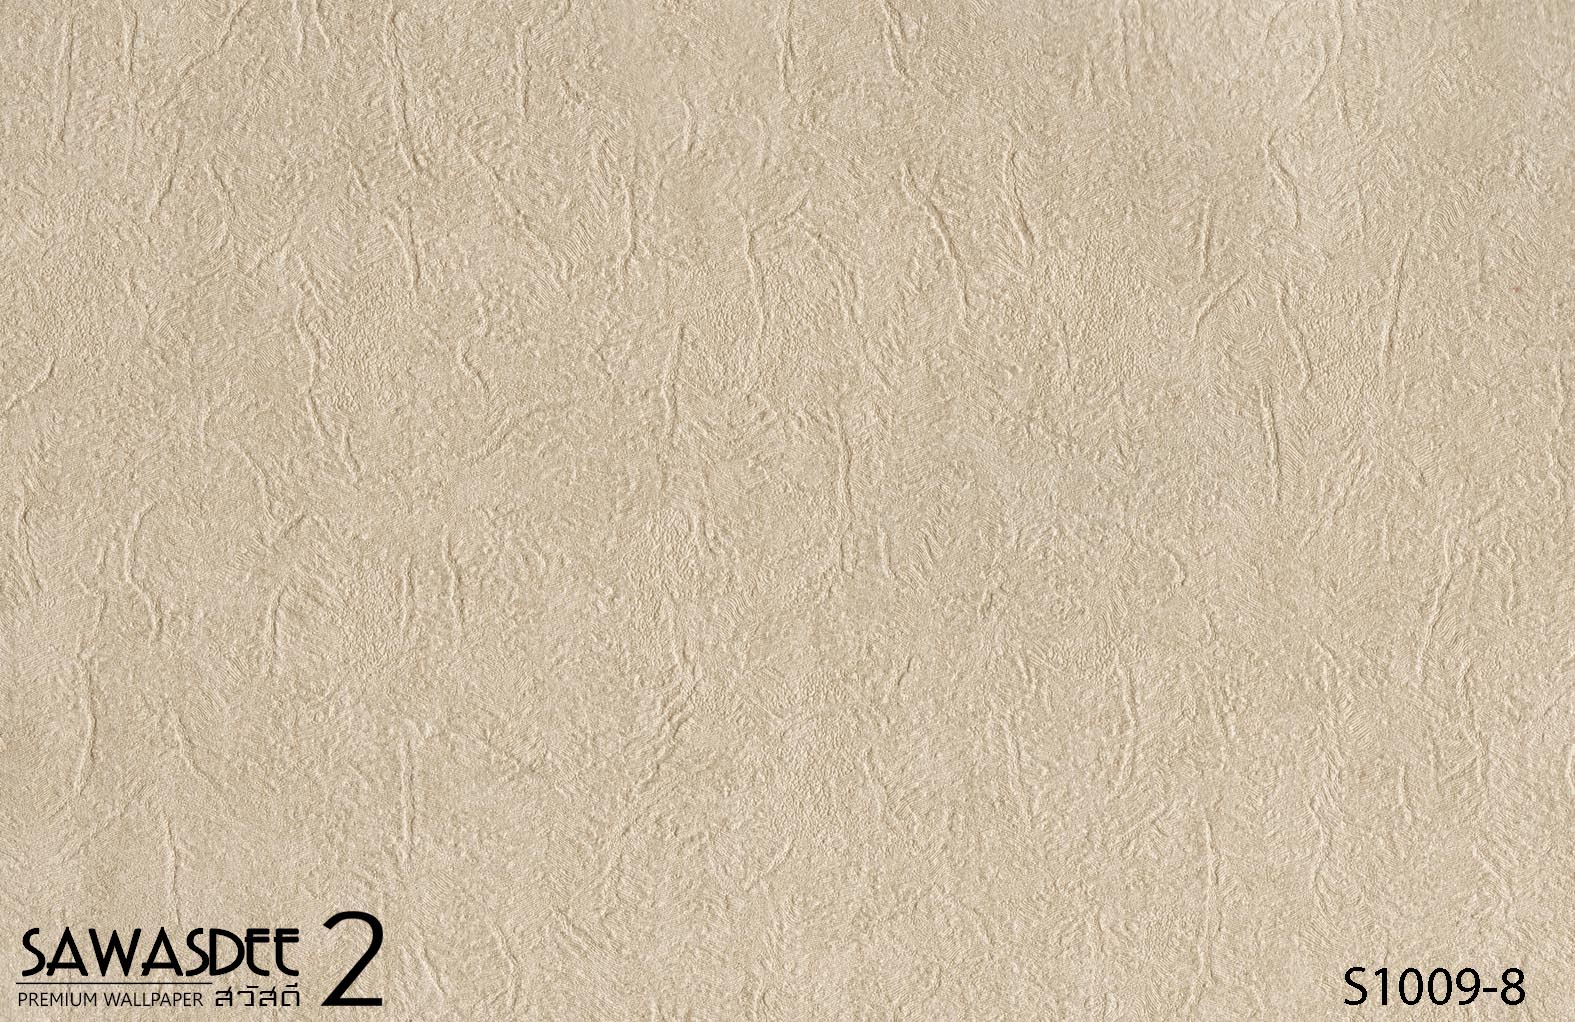 Wallpaper (SAWASDEE 2) S1009-8